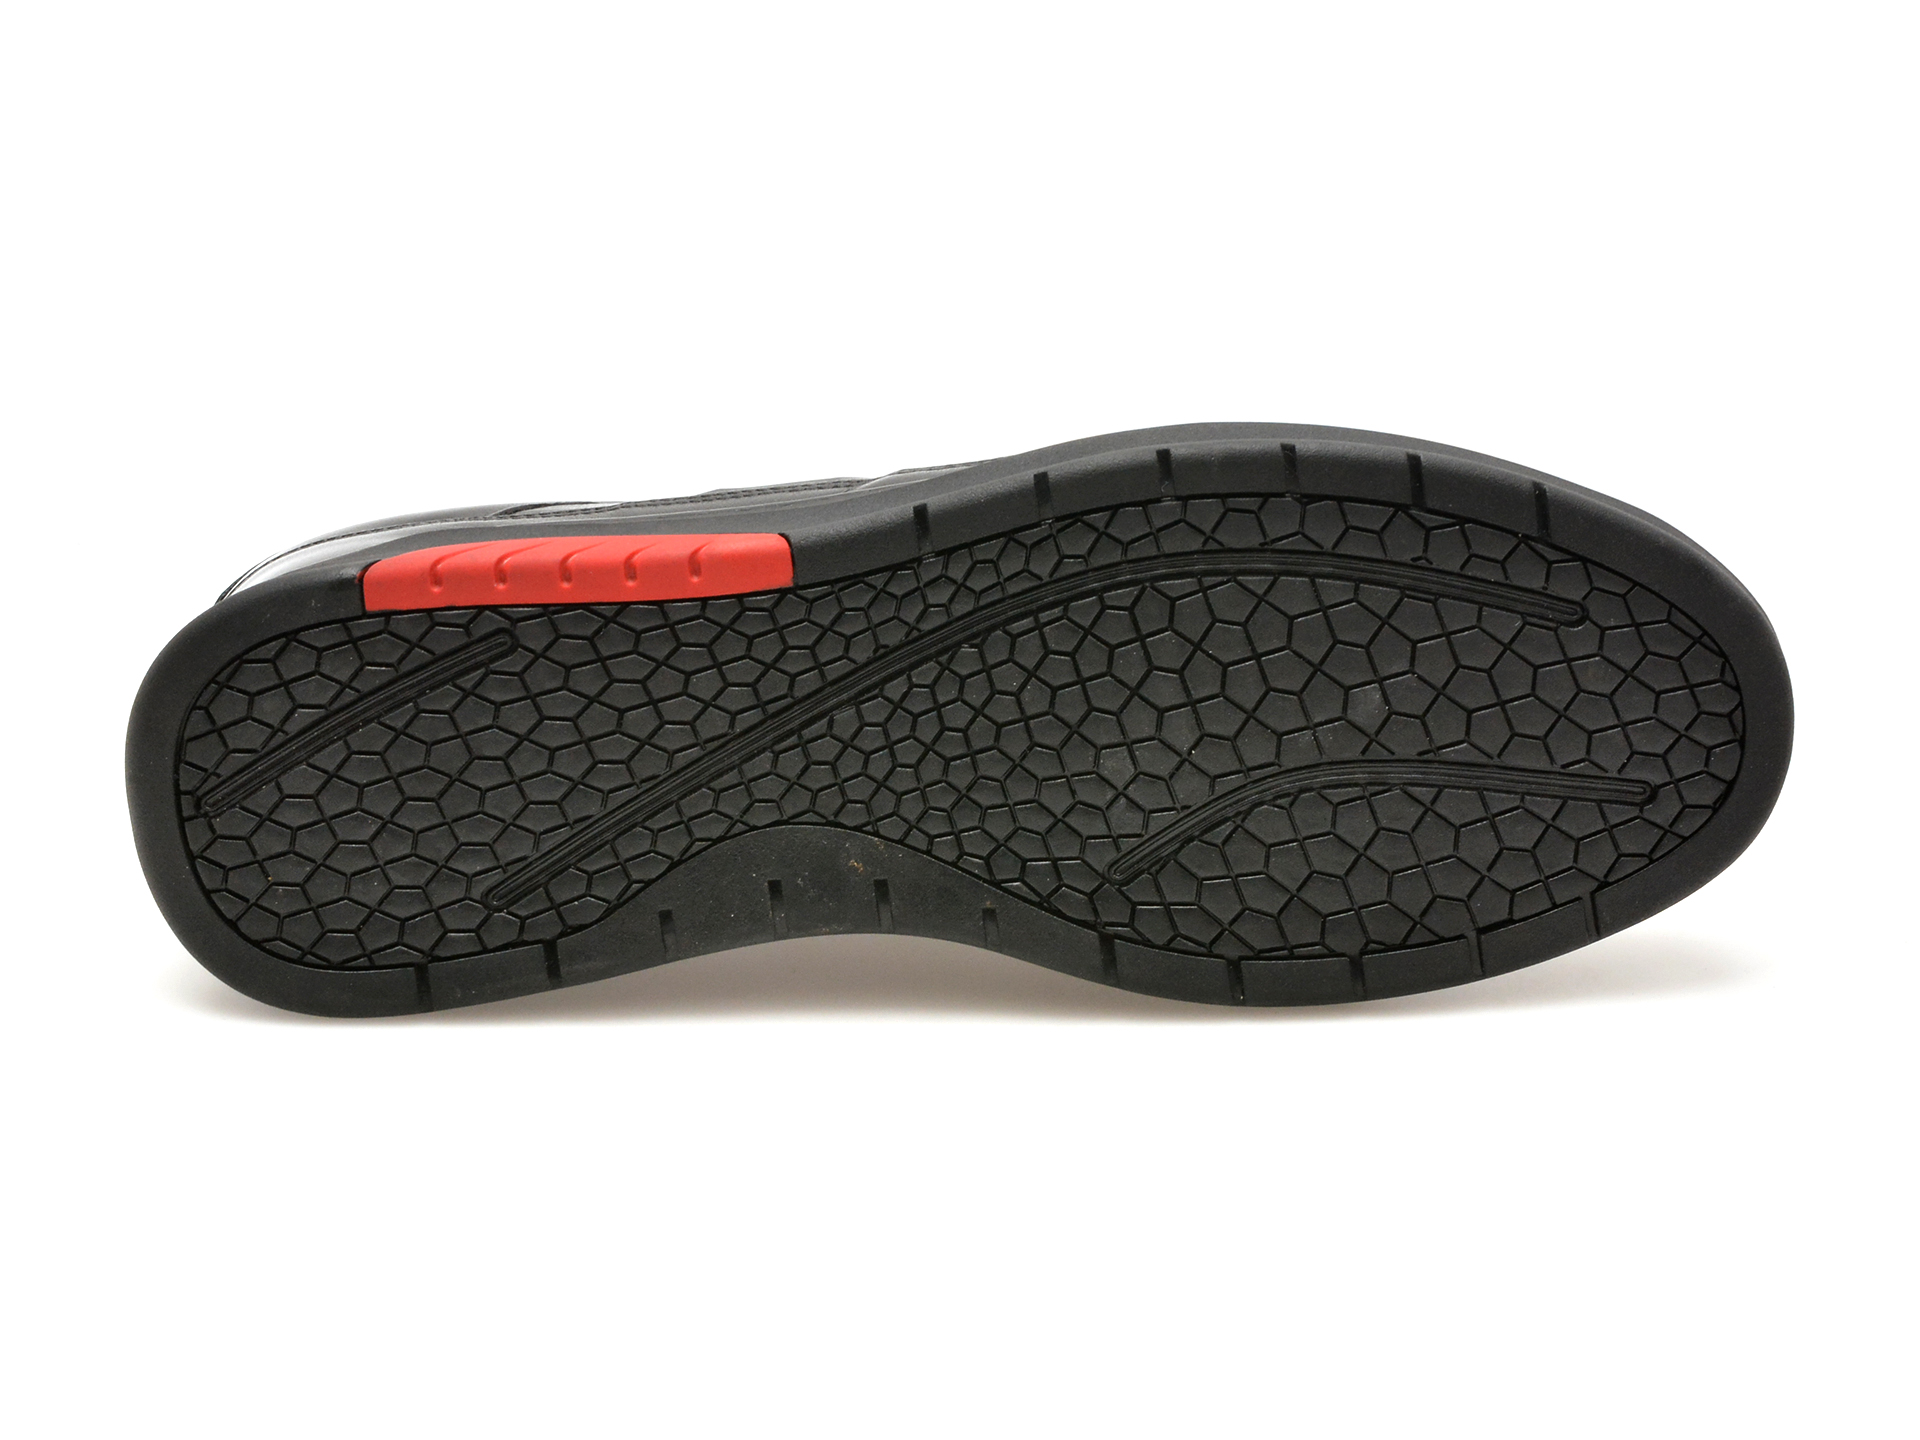 Pantofi Casual OTTER negri, NR02, din piele naturala